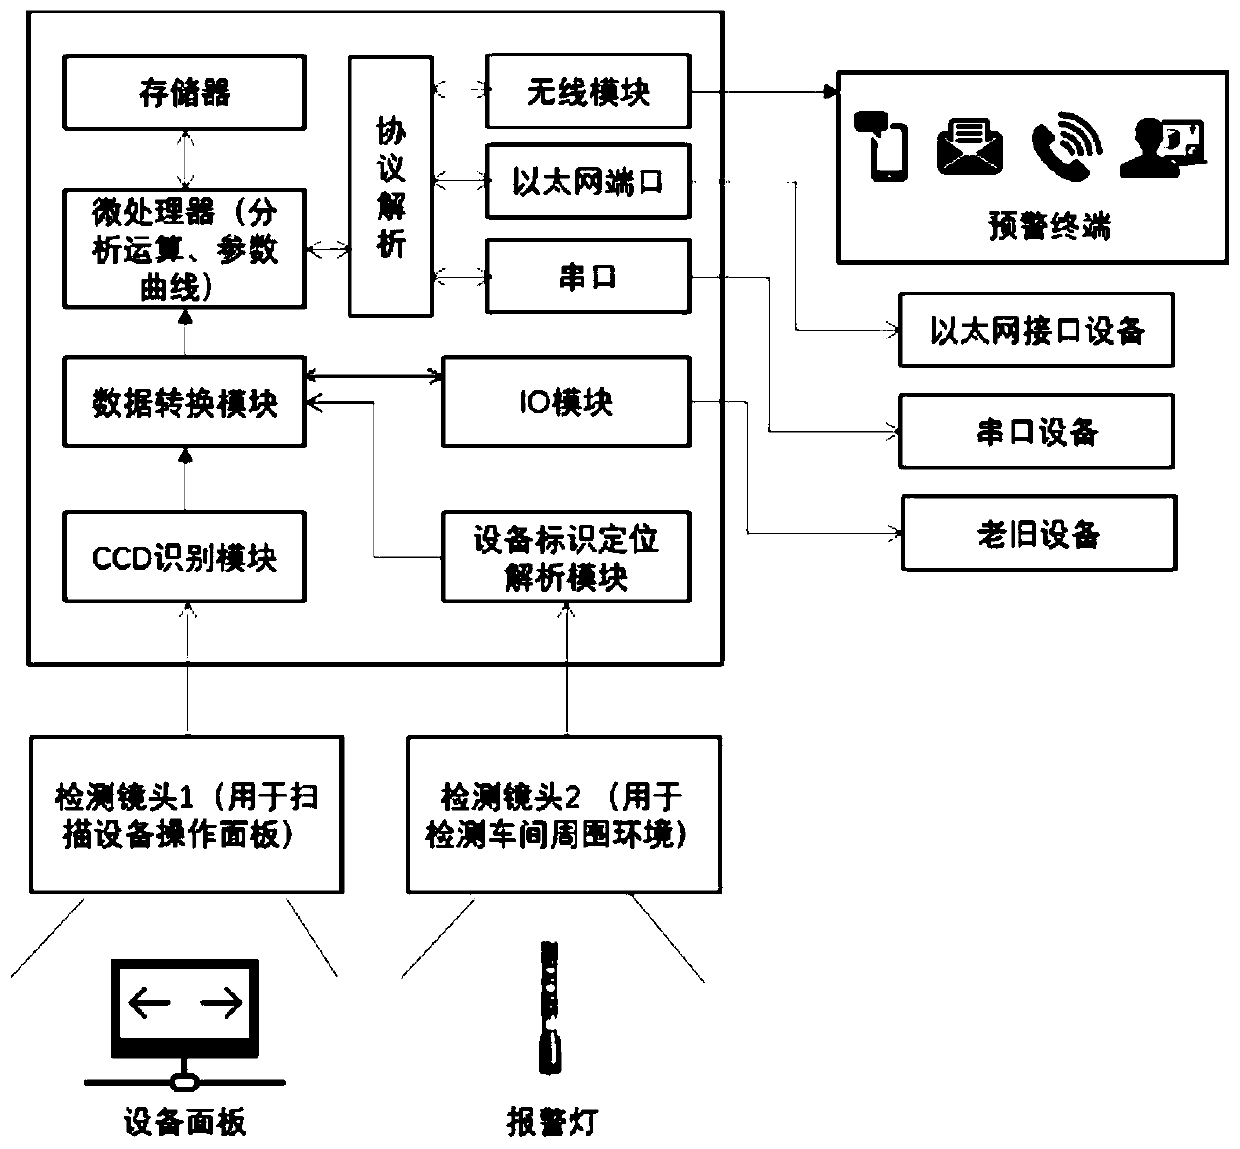 Edge computing gateway based on visual identification